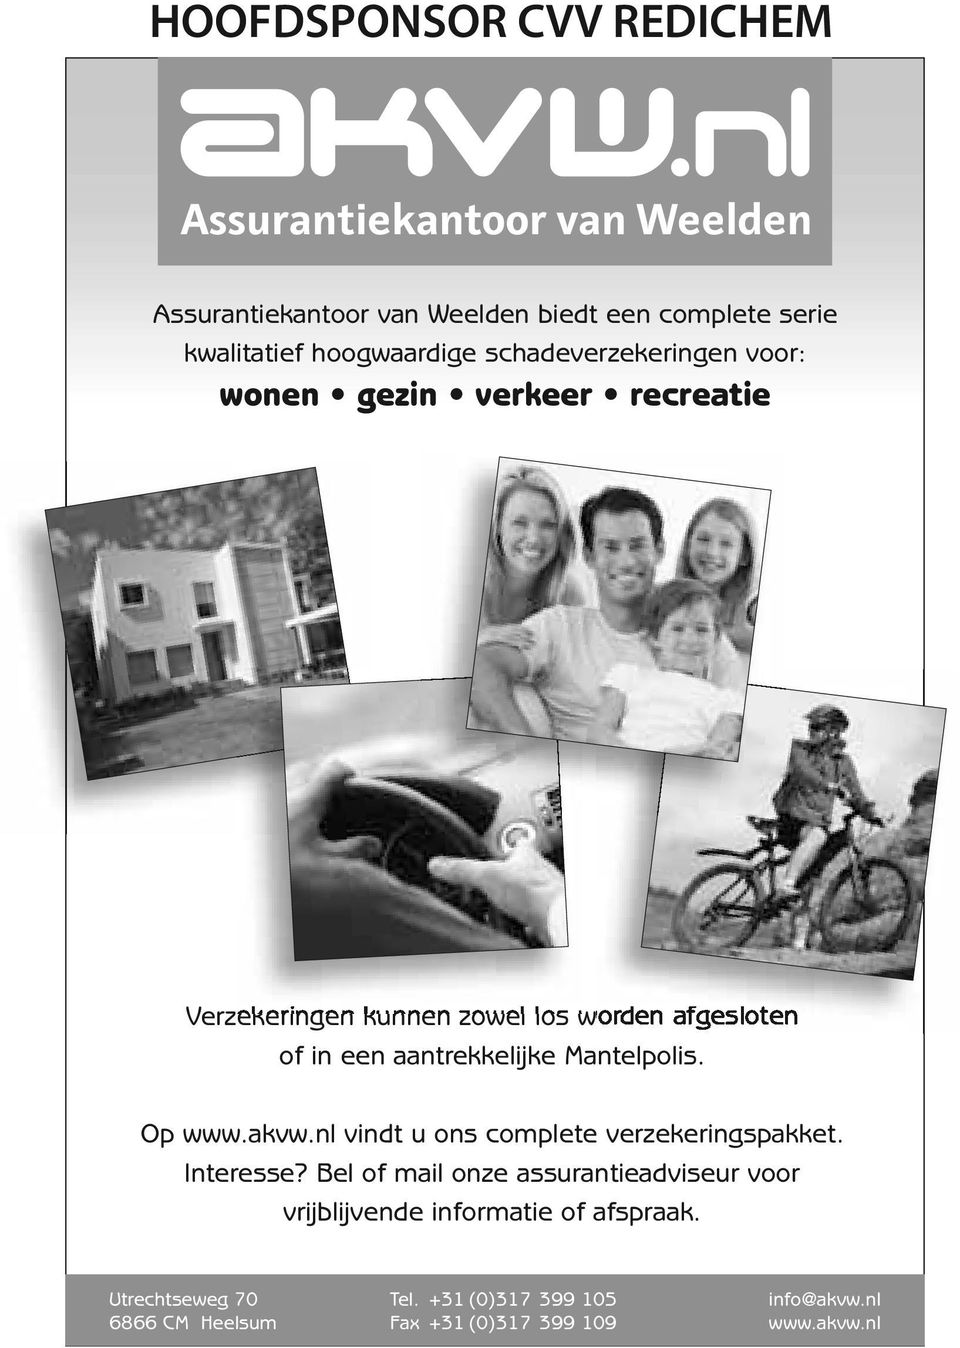 Op www.akvw.nl vindt u ons complete verzekeringspakket. Interesse?